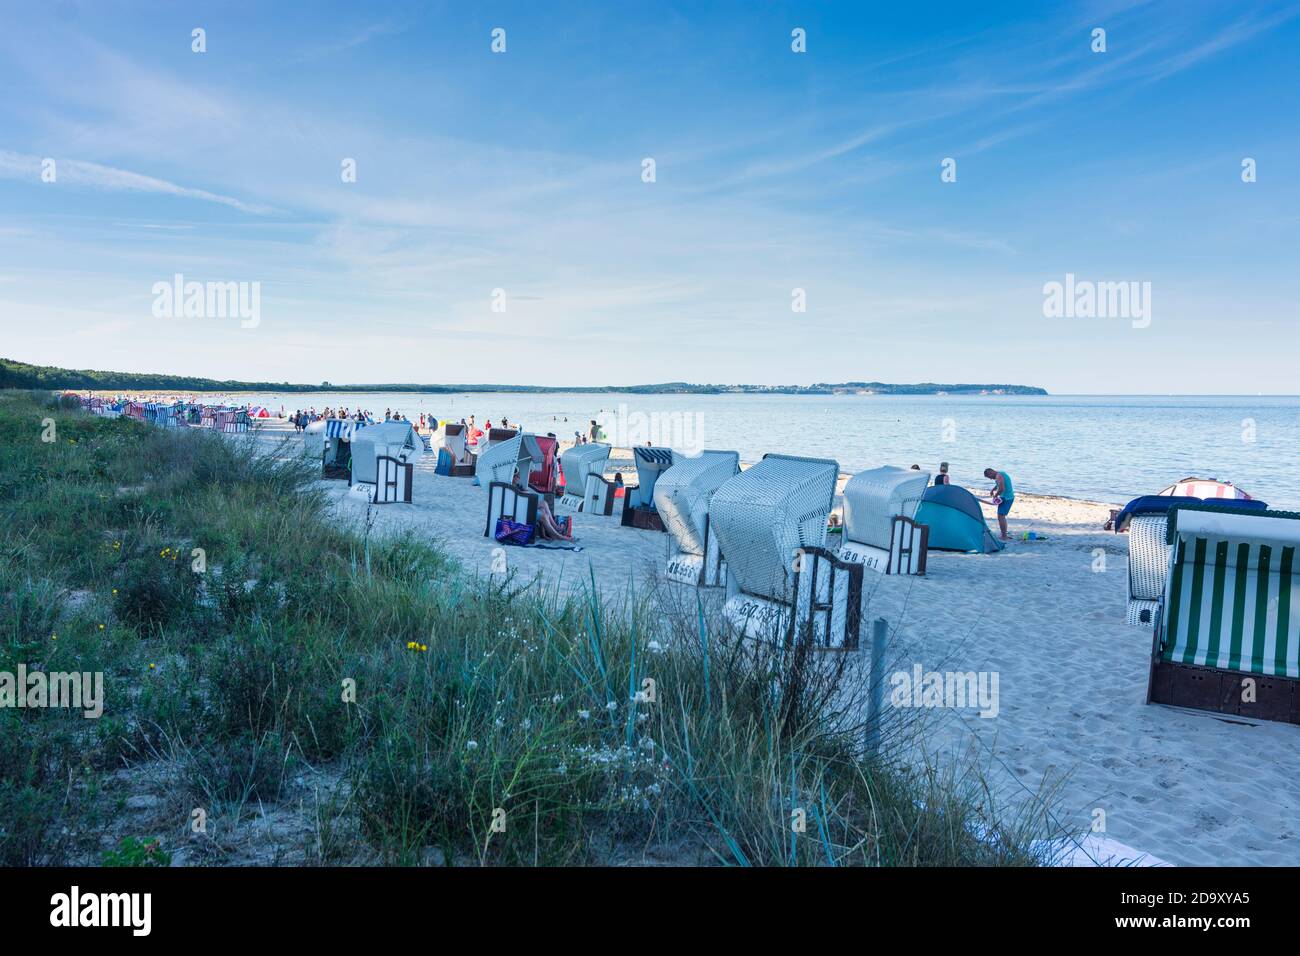 Mönchgut: spiaggia di Thiessow, Strandkörbe (sedie a sdraio), bagnante, Mar Baltico, Ostsee (Mar Baltico), Isola di Rügen, Meclemburgo-Vorpommern, Germania Foto Stock